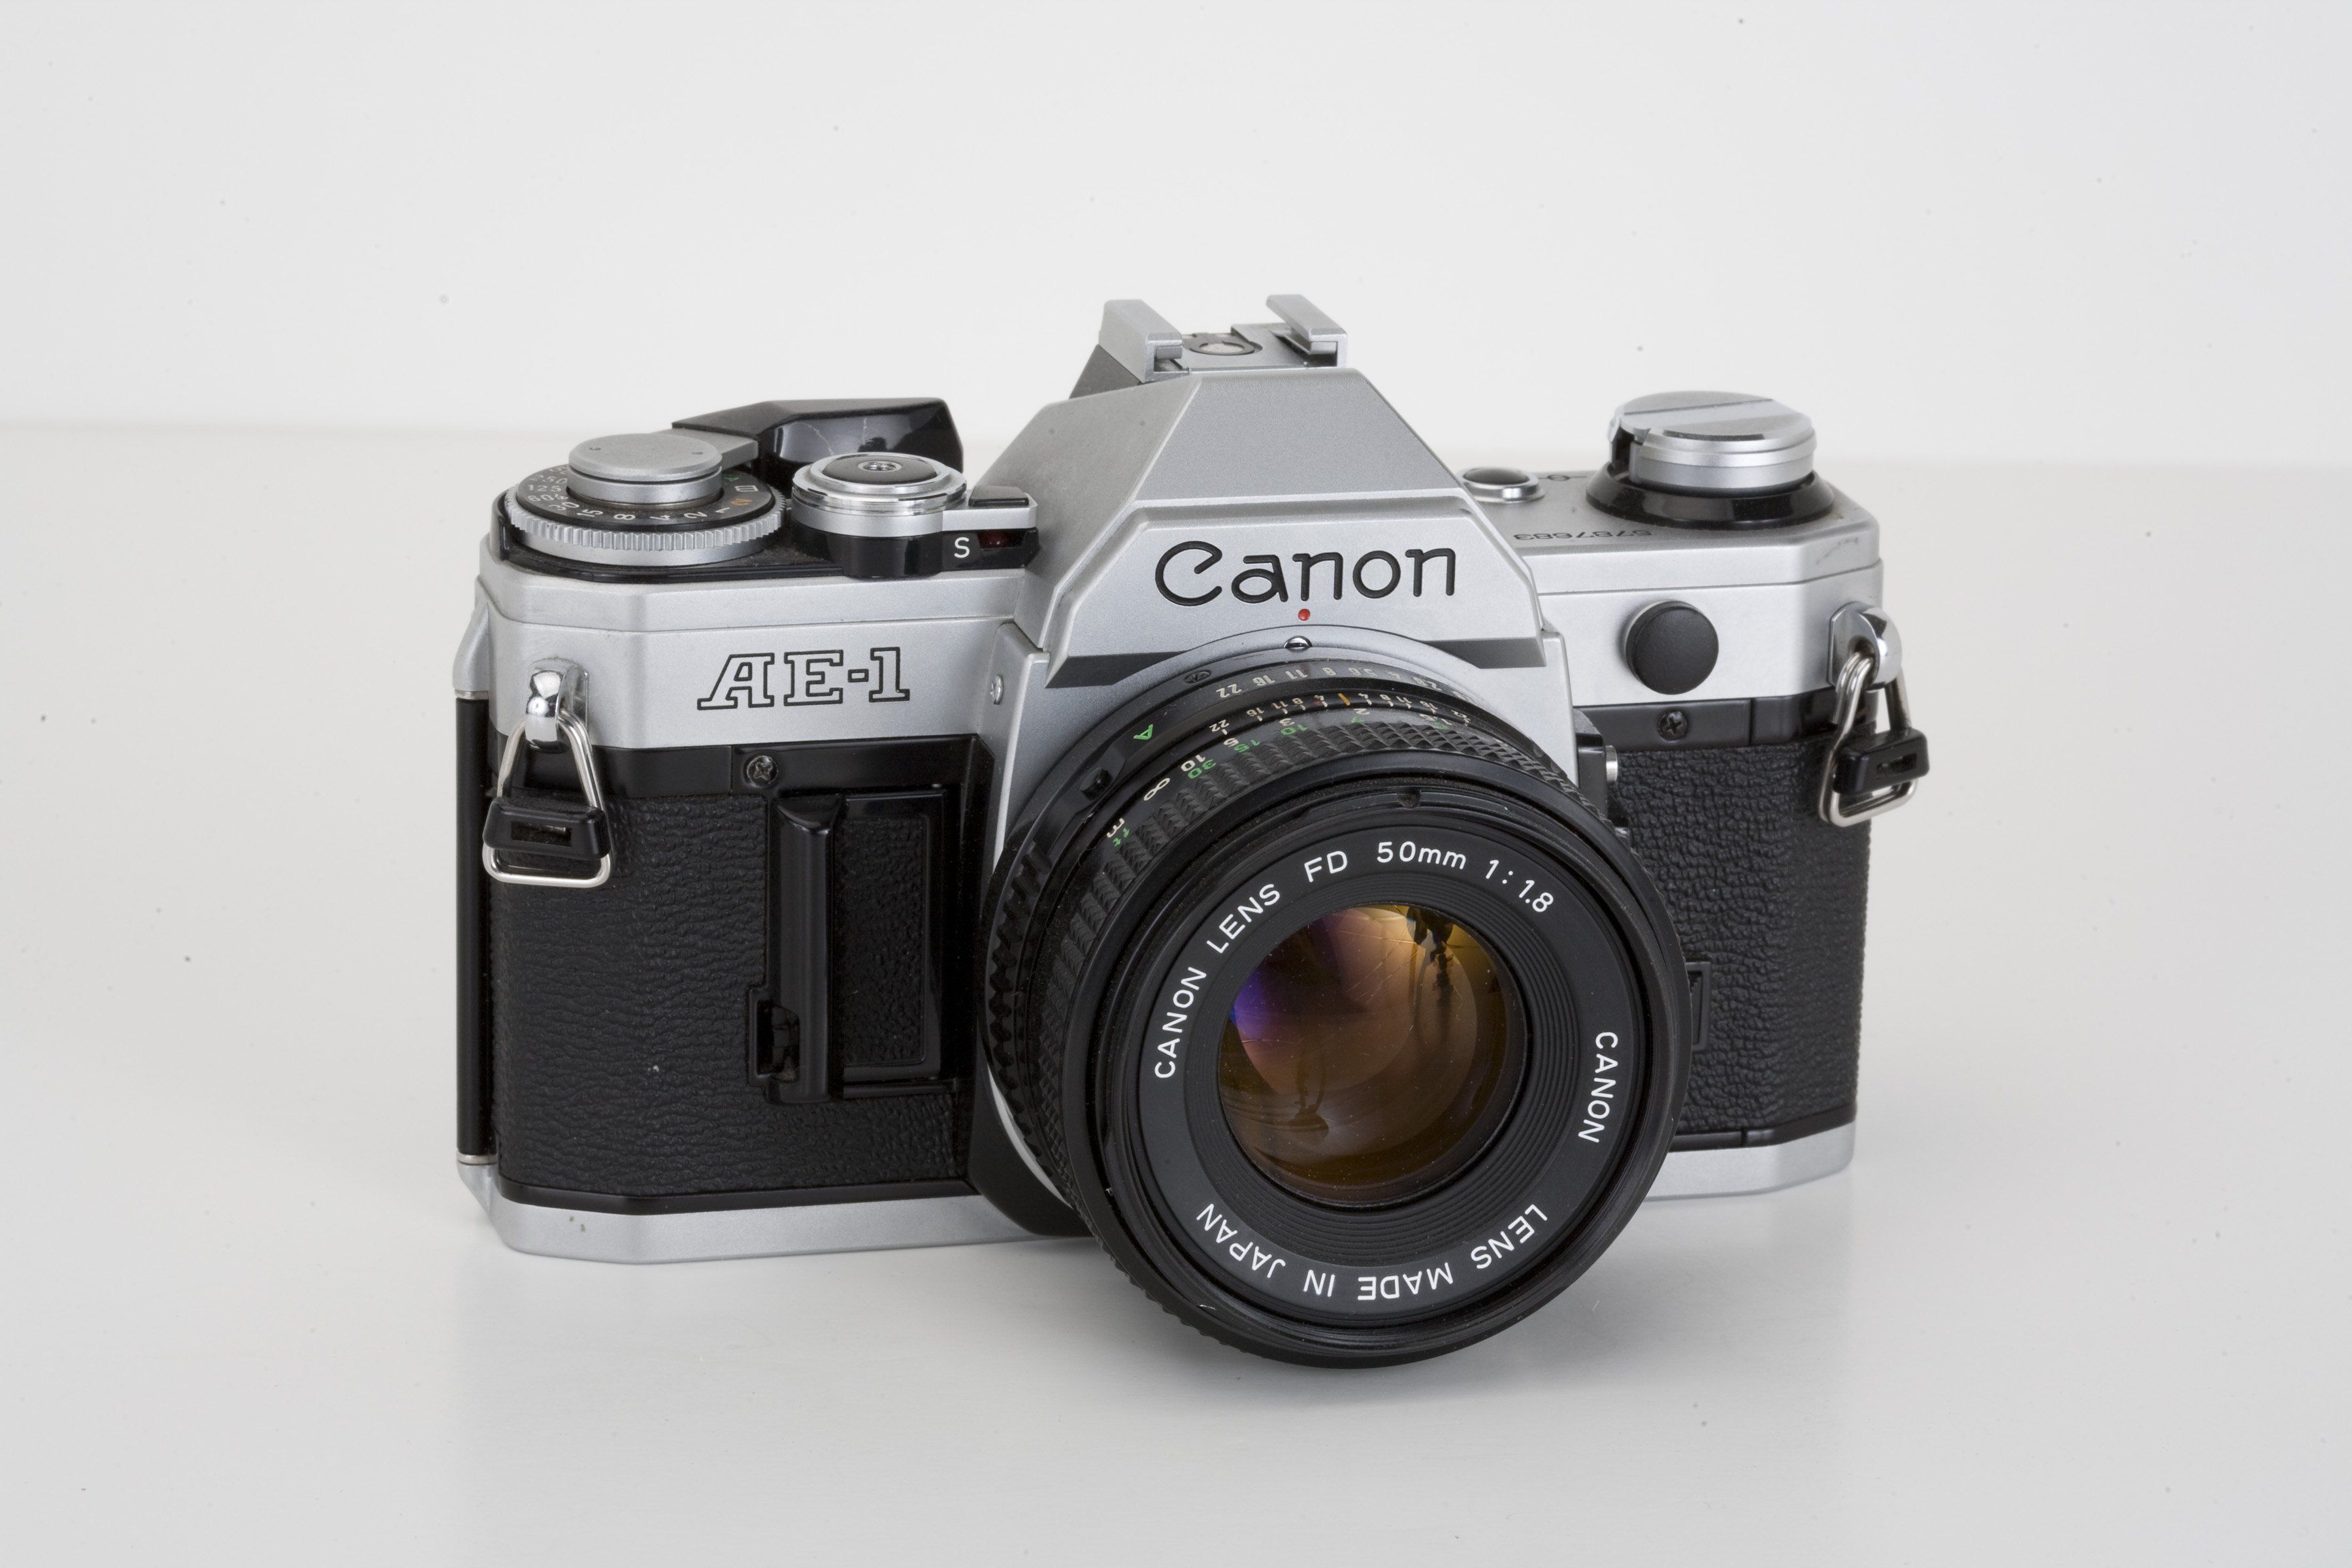 good starter camera for amateur photography